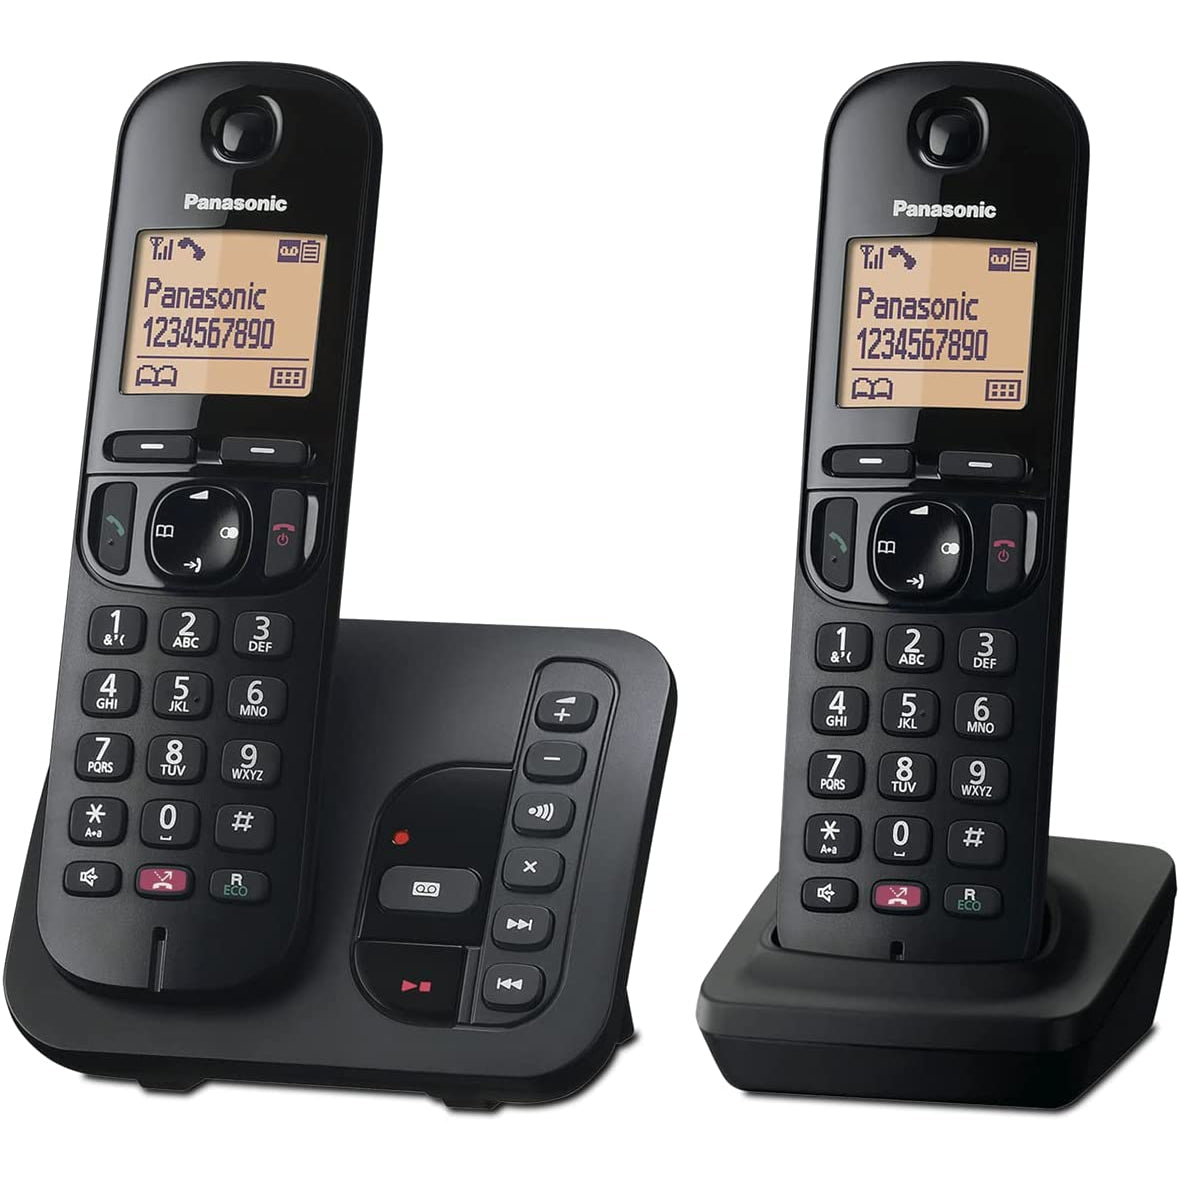 Panasonic KX-TGC262 Digital Cordless Phone Twin Pack - Black - Refurbished Excellent